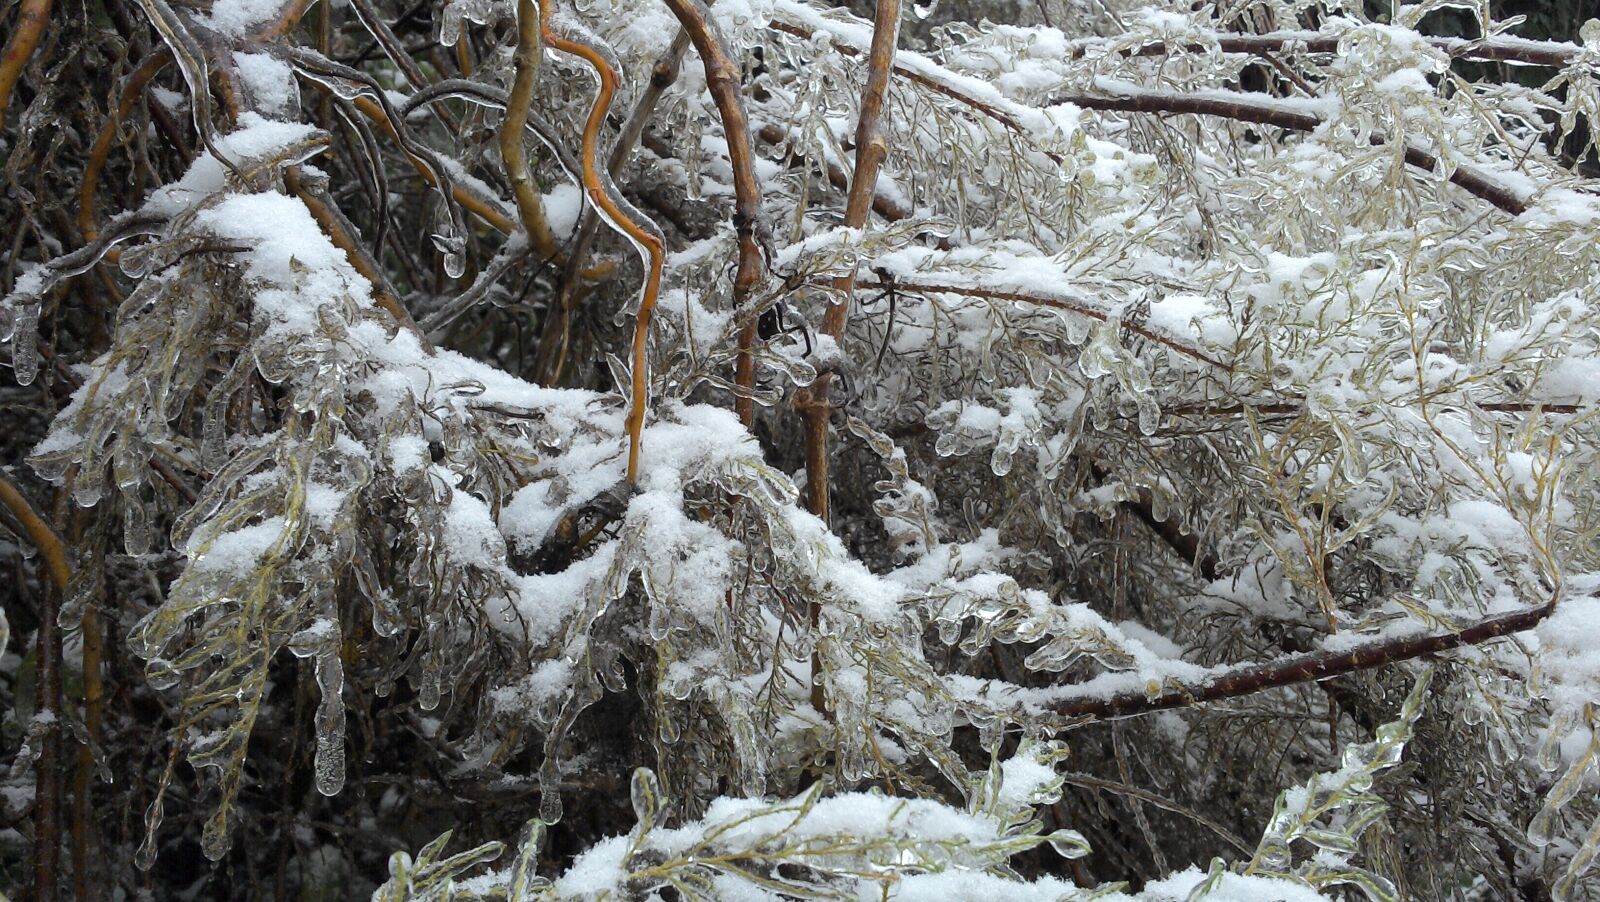 Motorola RAZR i sample photo. Tree, snow, frozen photography